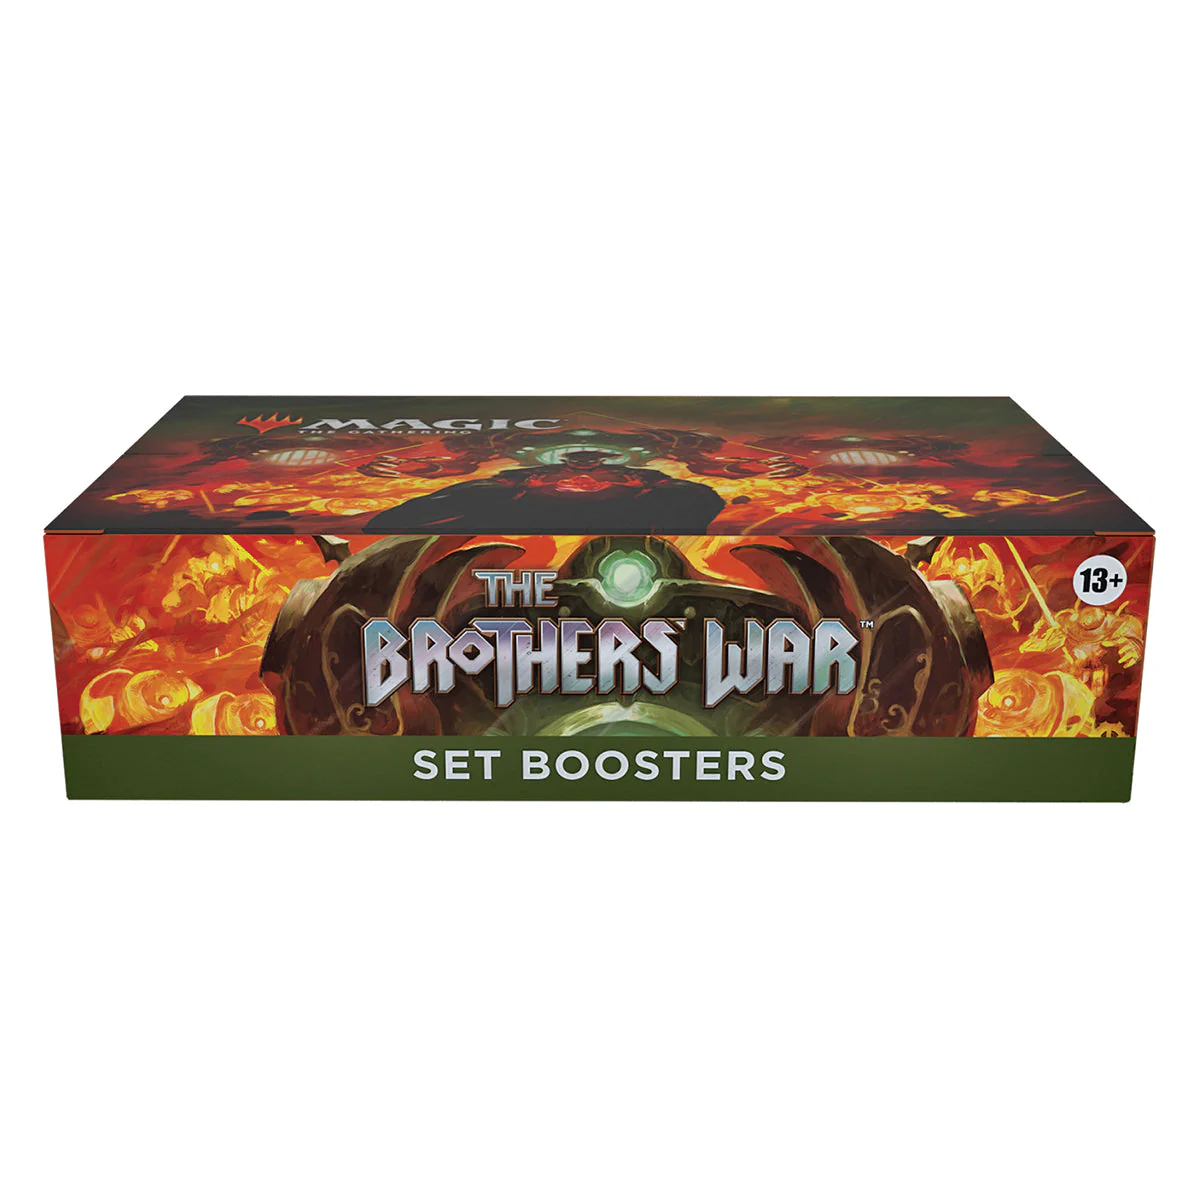 Magic The Brothers' War Set Booster Box